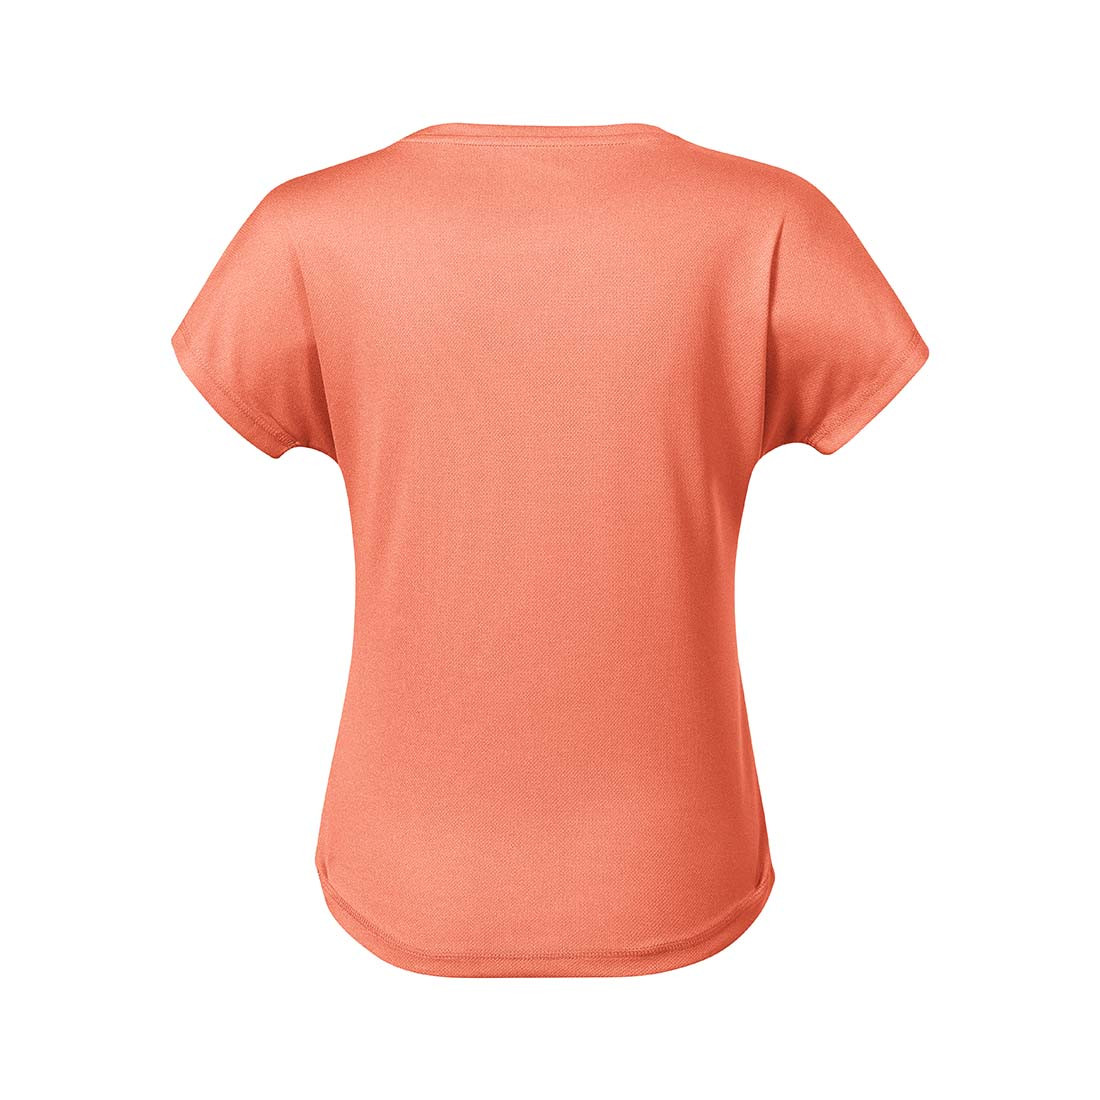 CHANCE Women's T-shirt - Safetywear